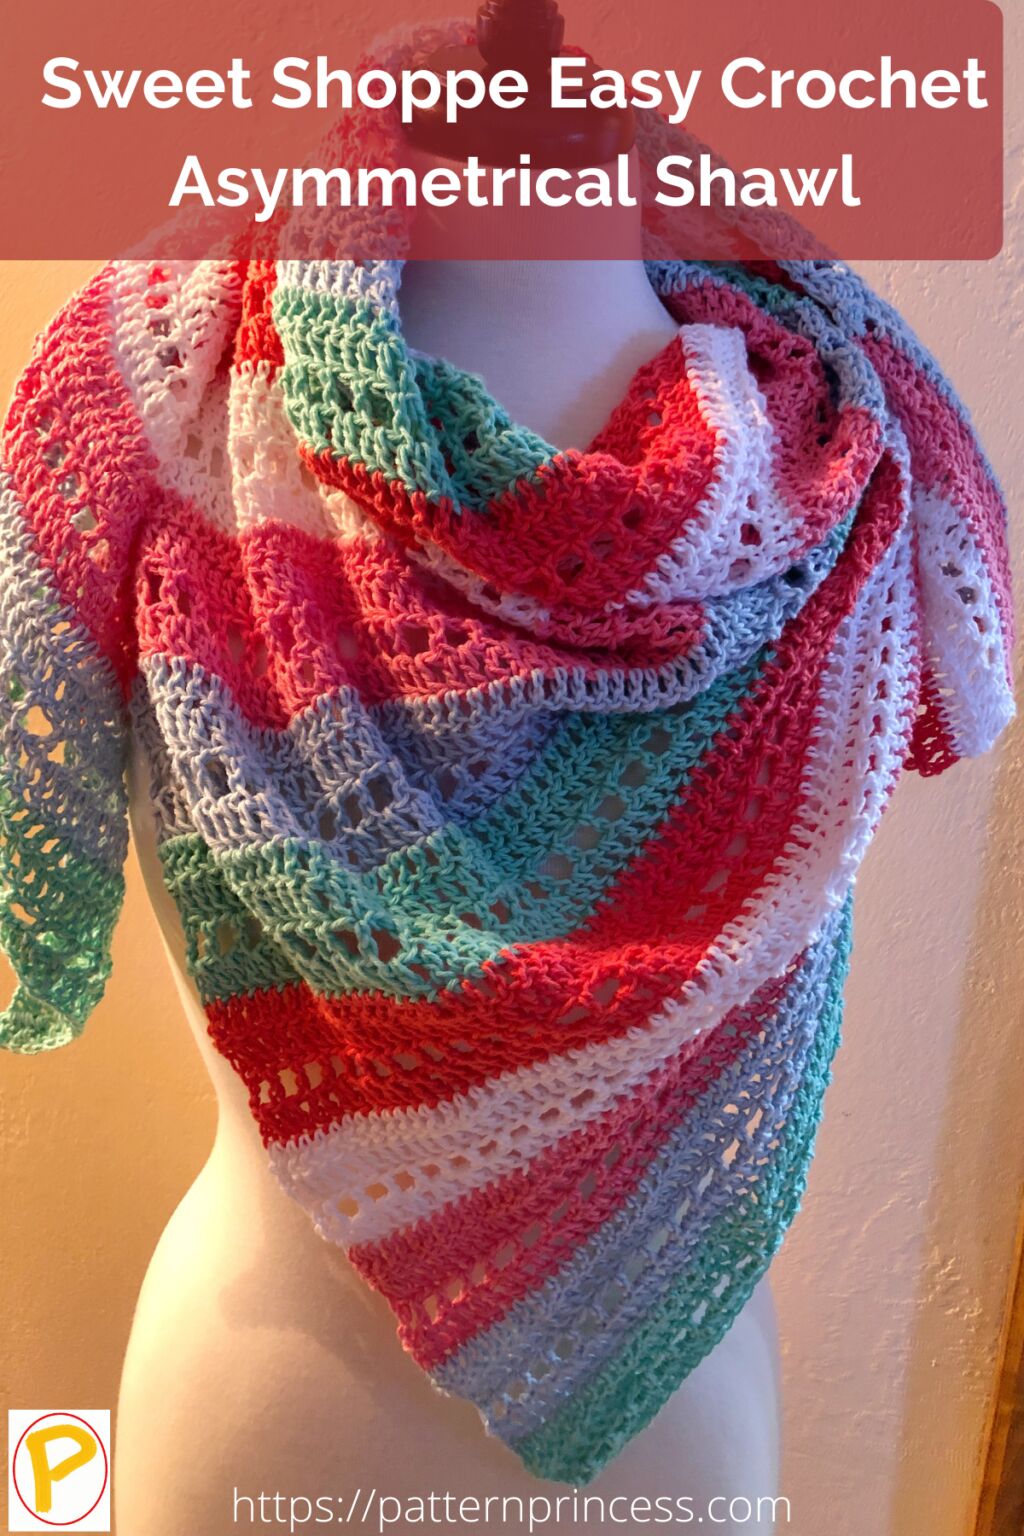 Crochet Patterns Galore - Sweet Shoppe Easy Asymmetrical Shawl